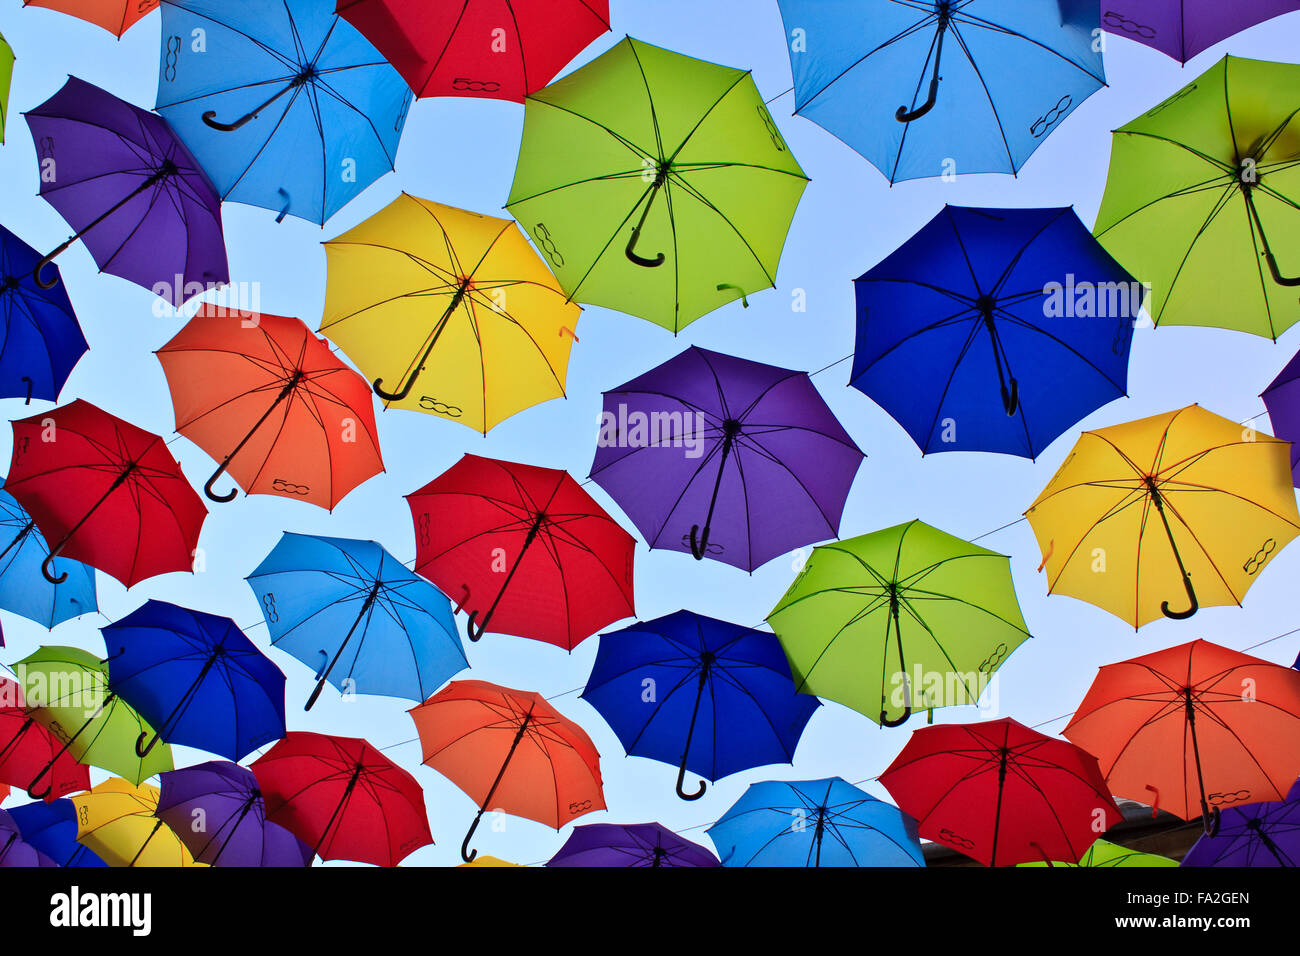 Colorful umbrellas in the sky Stock Photo